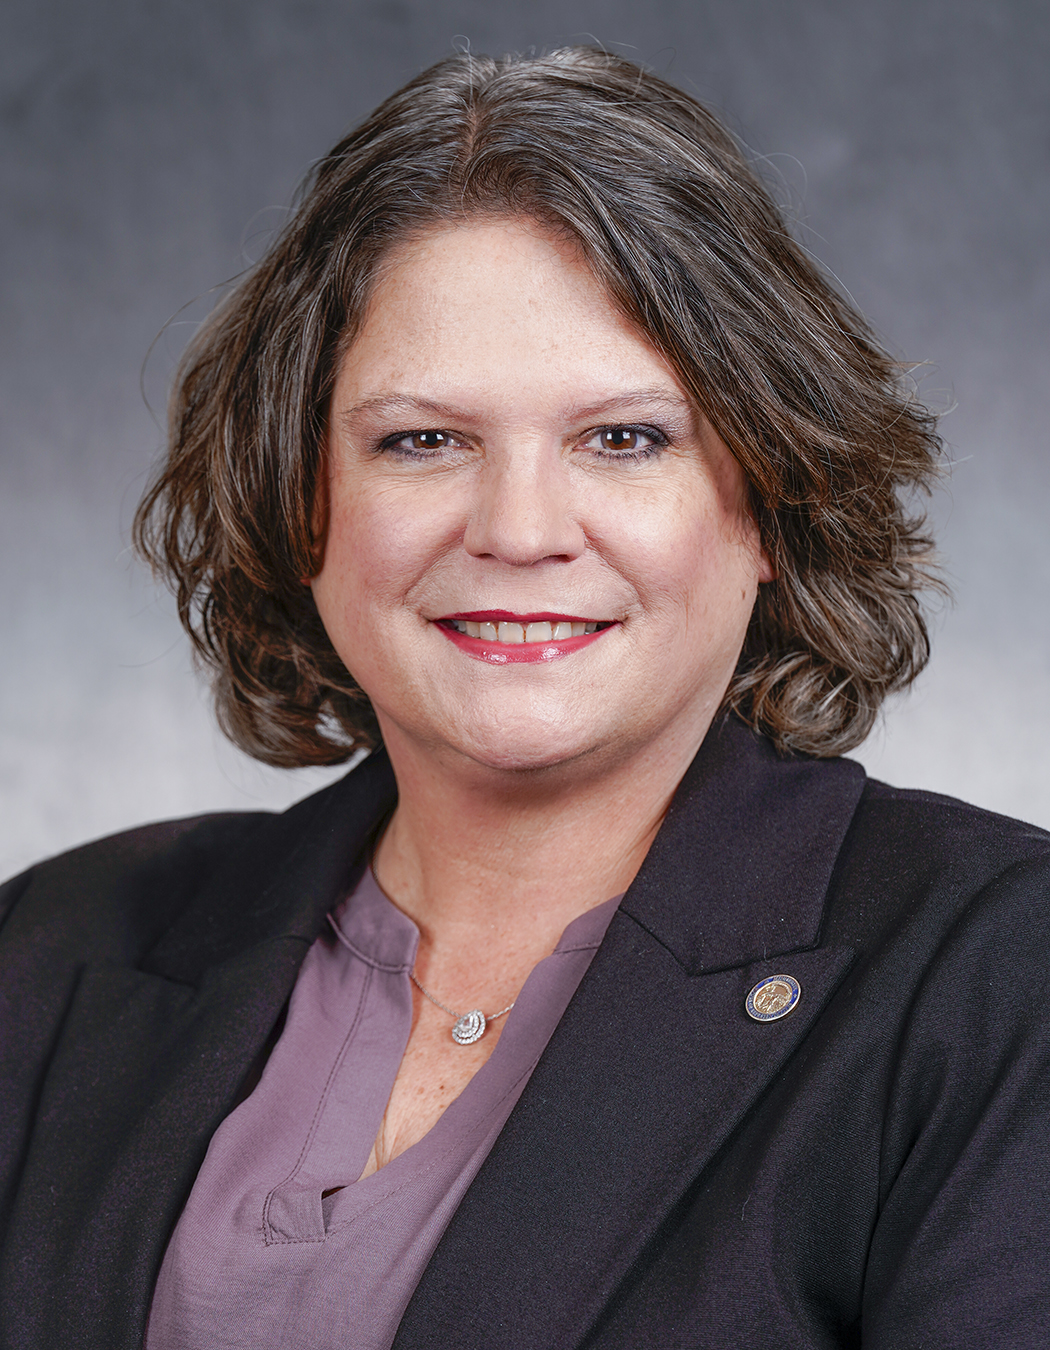 Rep. Cheryl Youakim